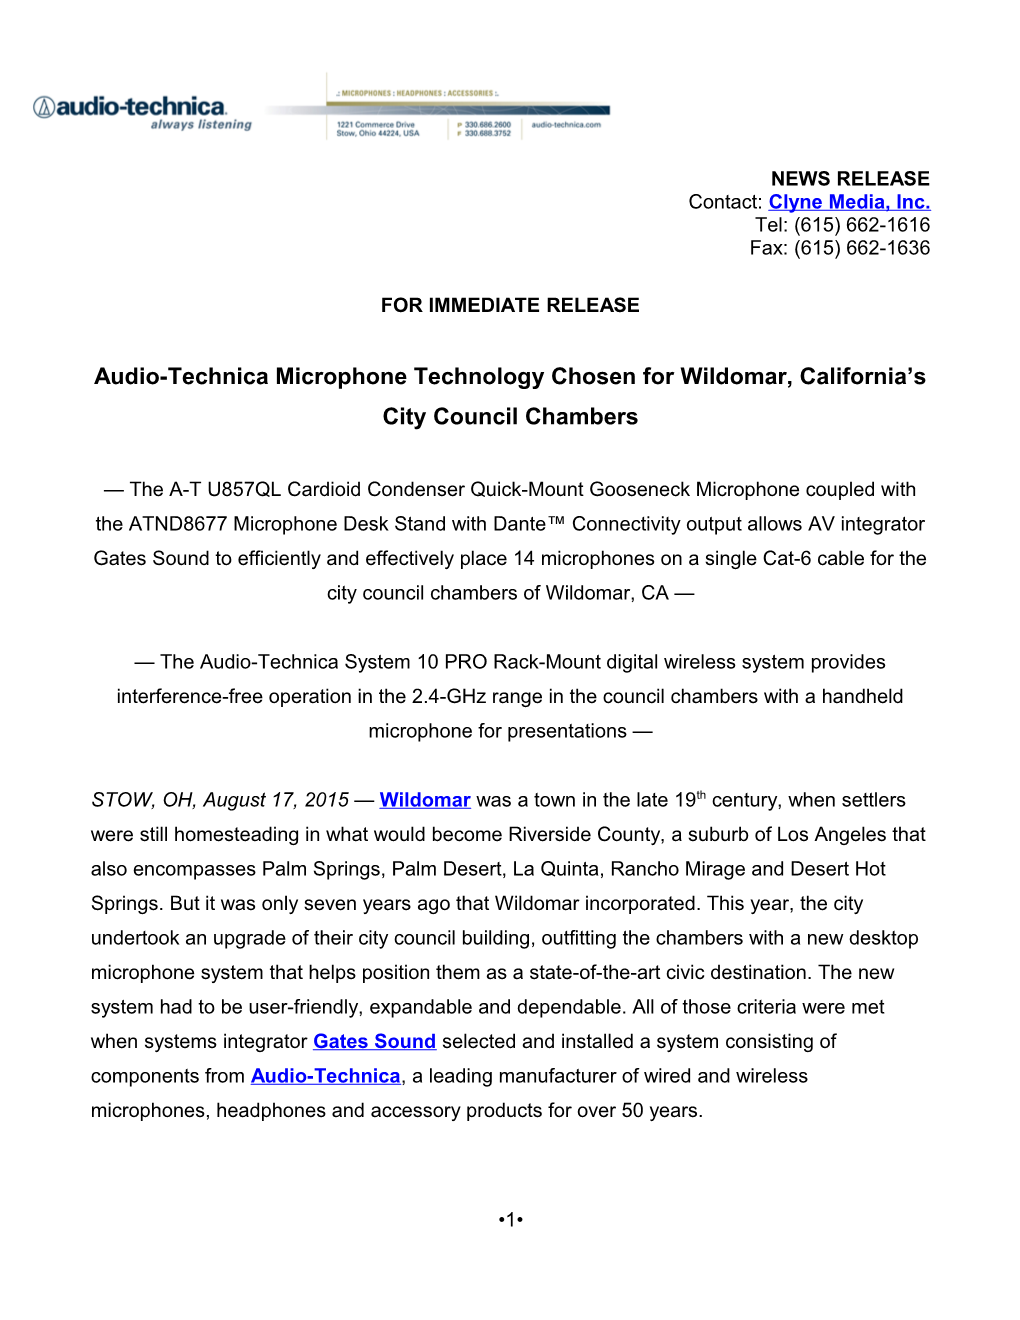 Audio-Technica Microphone Technology Chosen Forwildomar, California S City Council Chambers